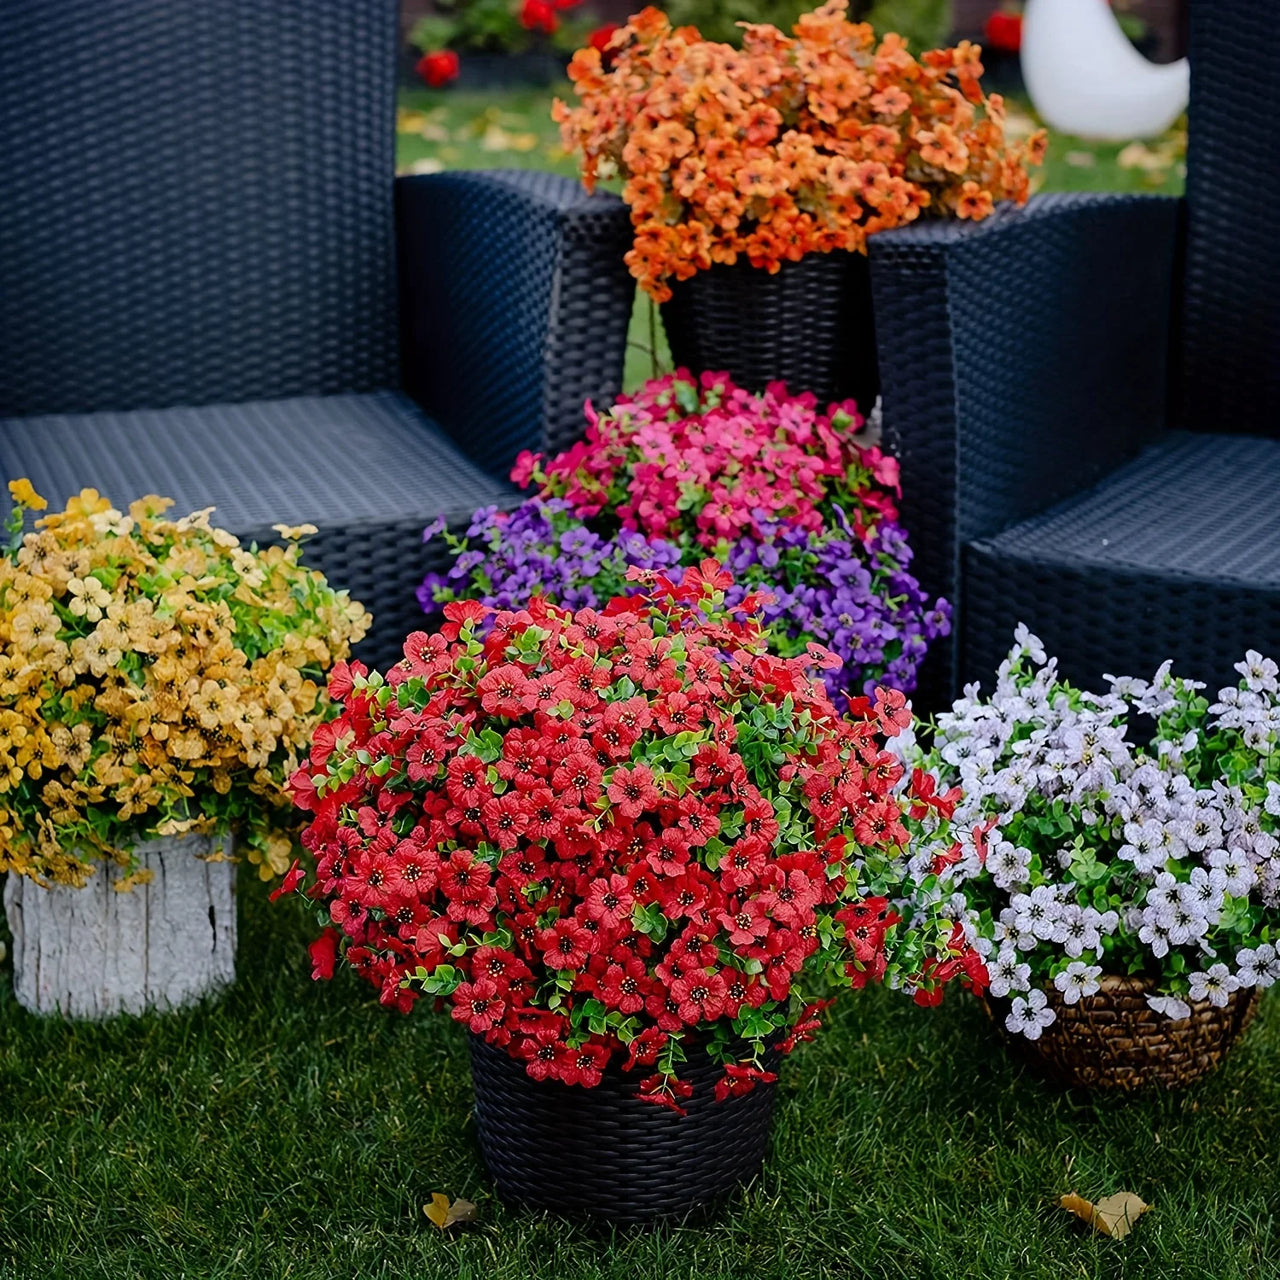 Outdoor Plants - Artificial flowers